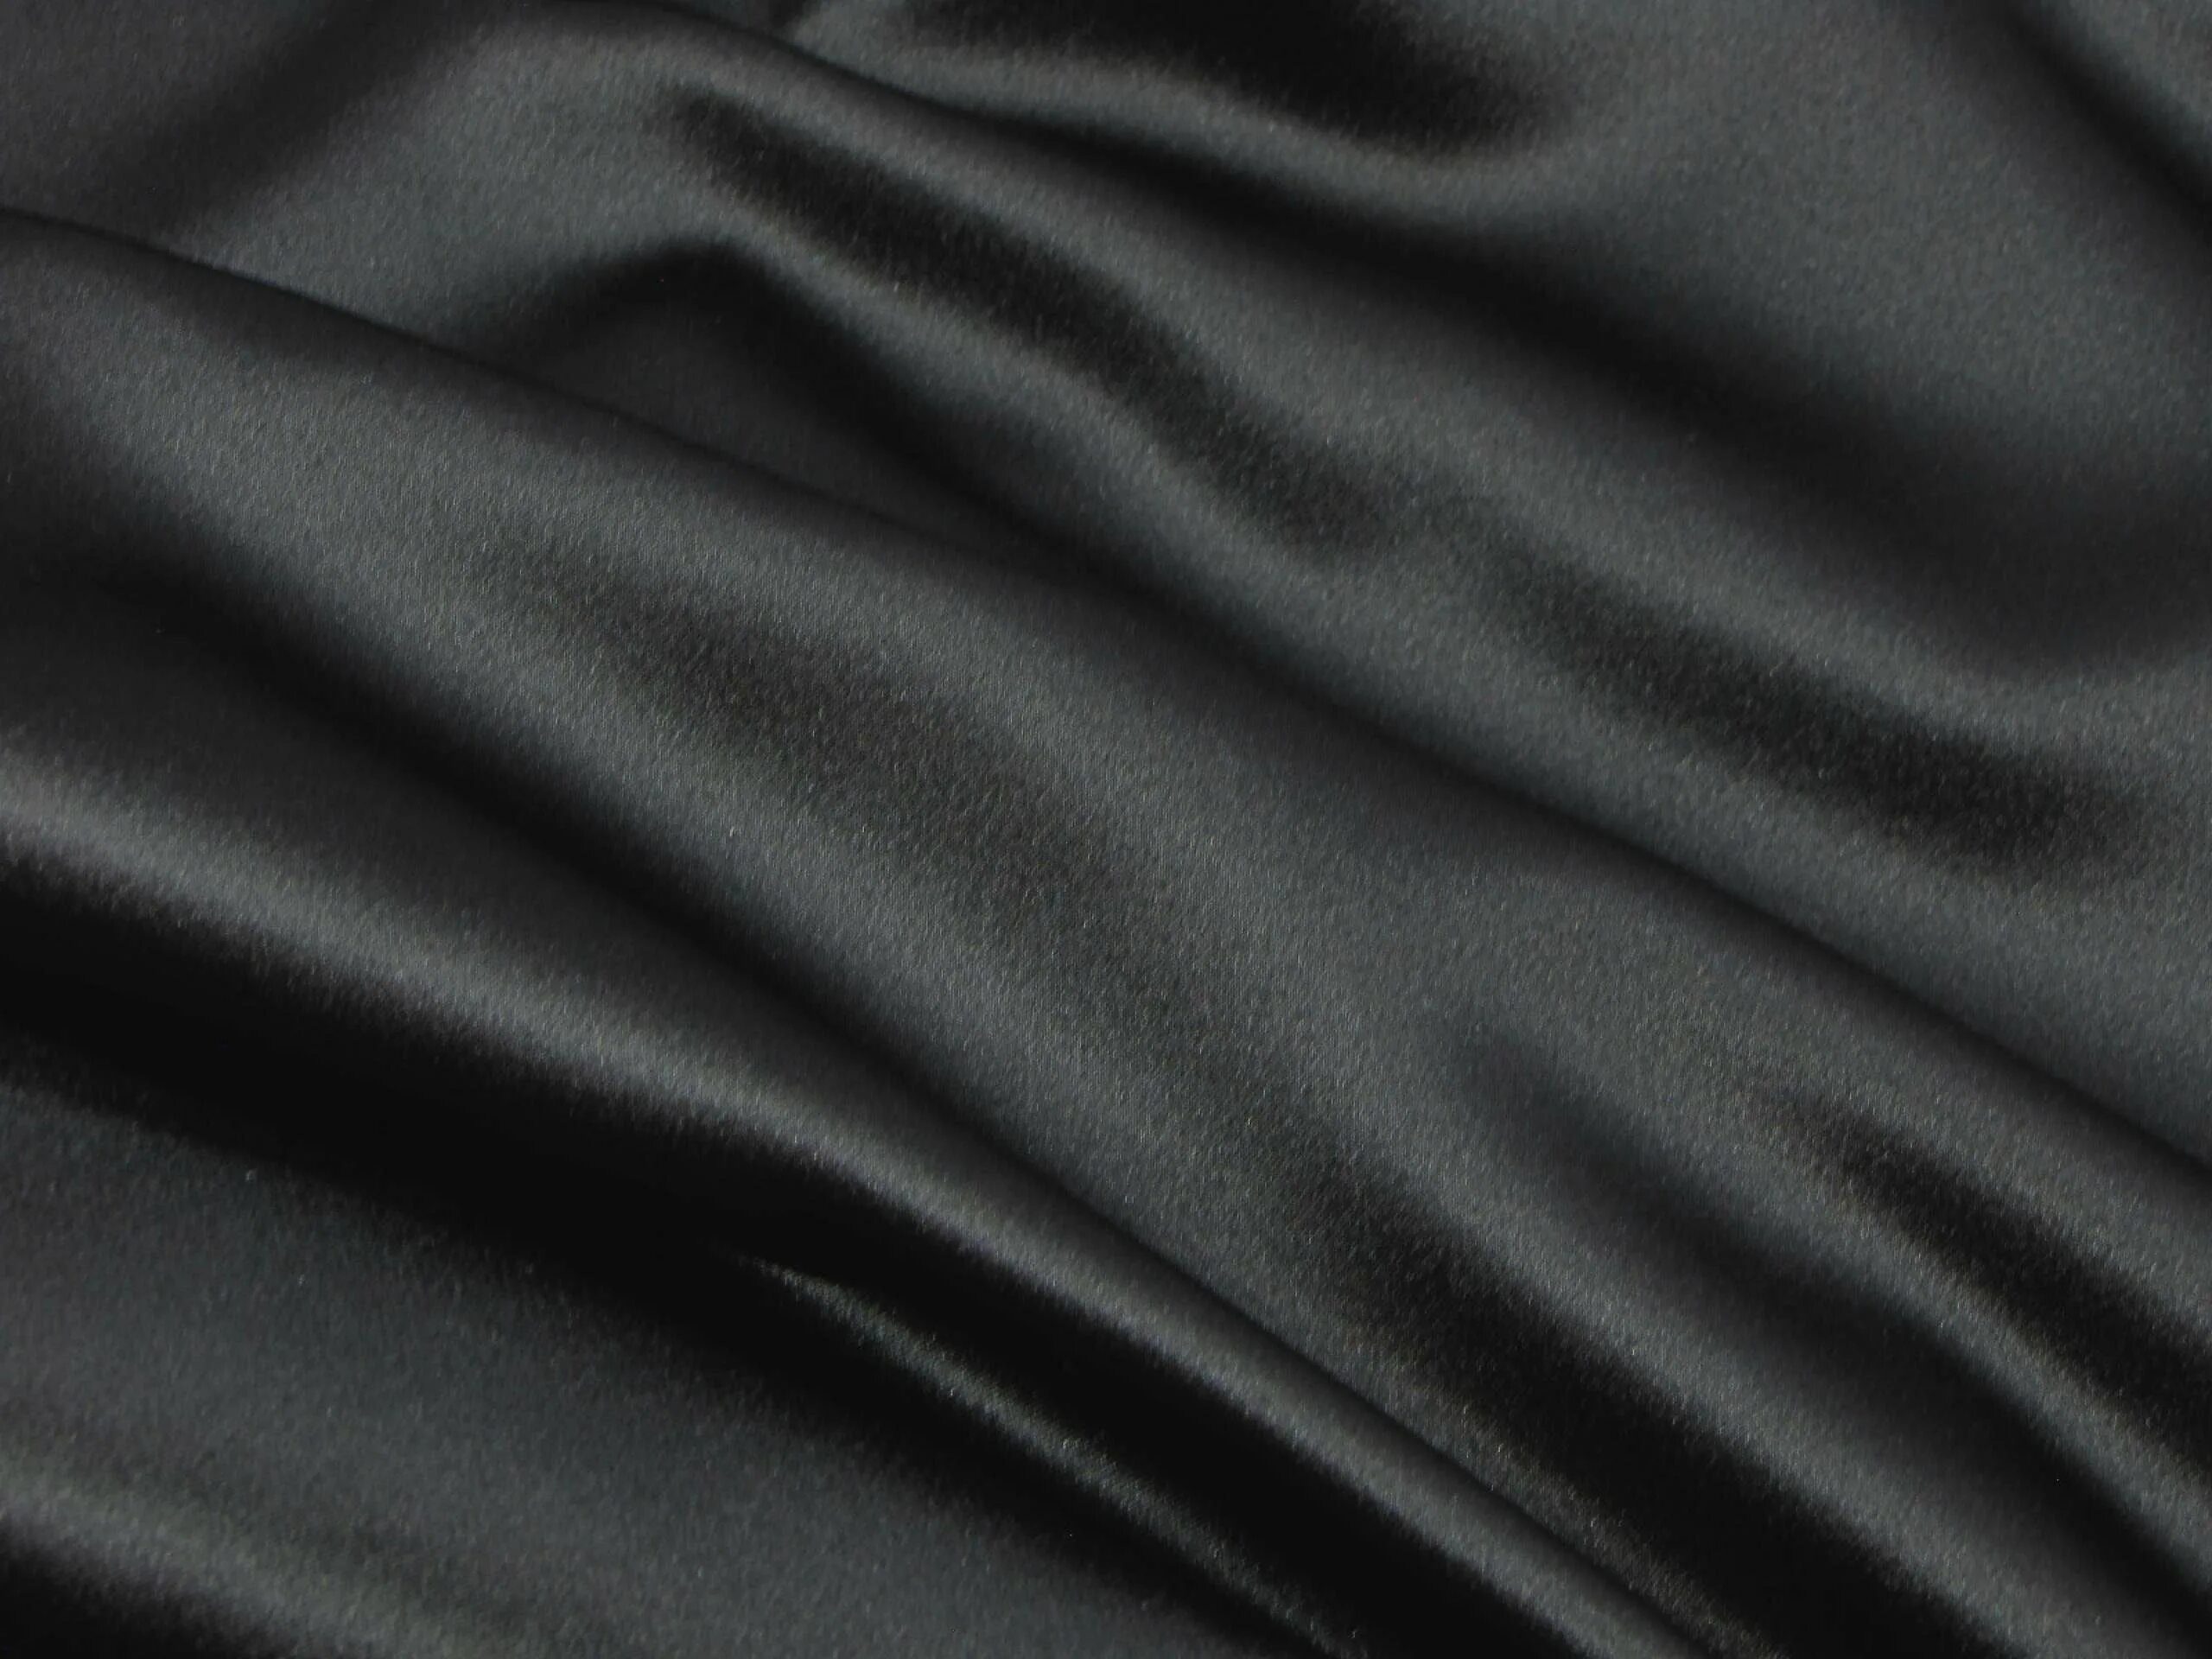 401a - ткань черная антрацит. Ткань Black Illusium 350. Black Satin/ Блэк сатин. Черная ткань.